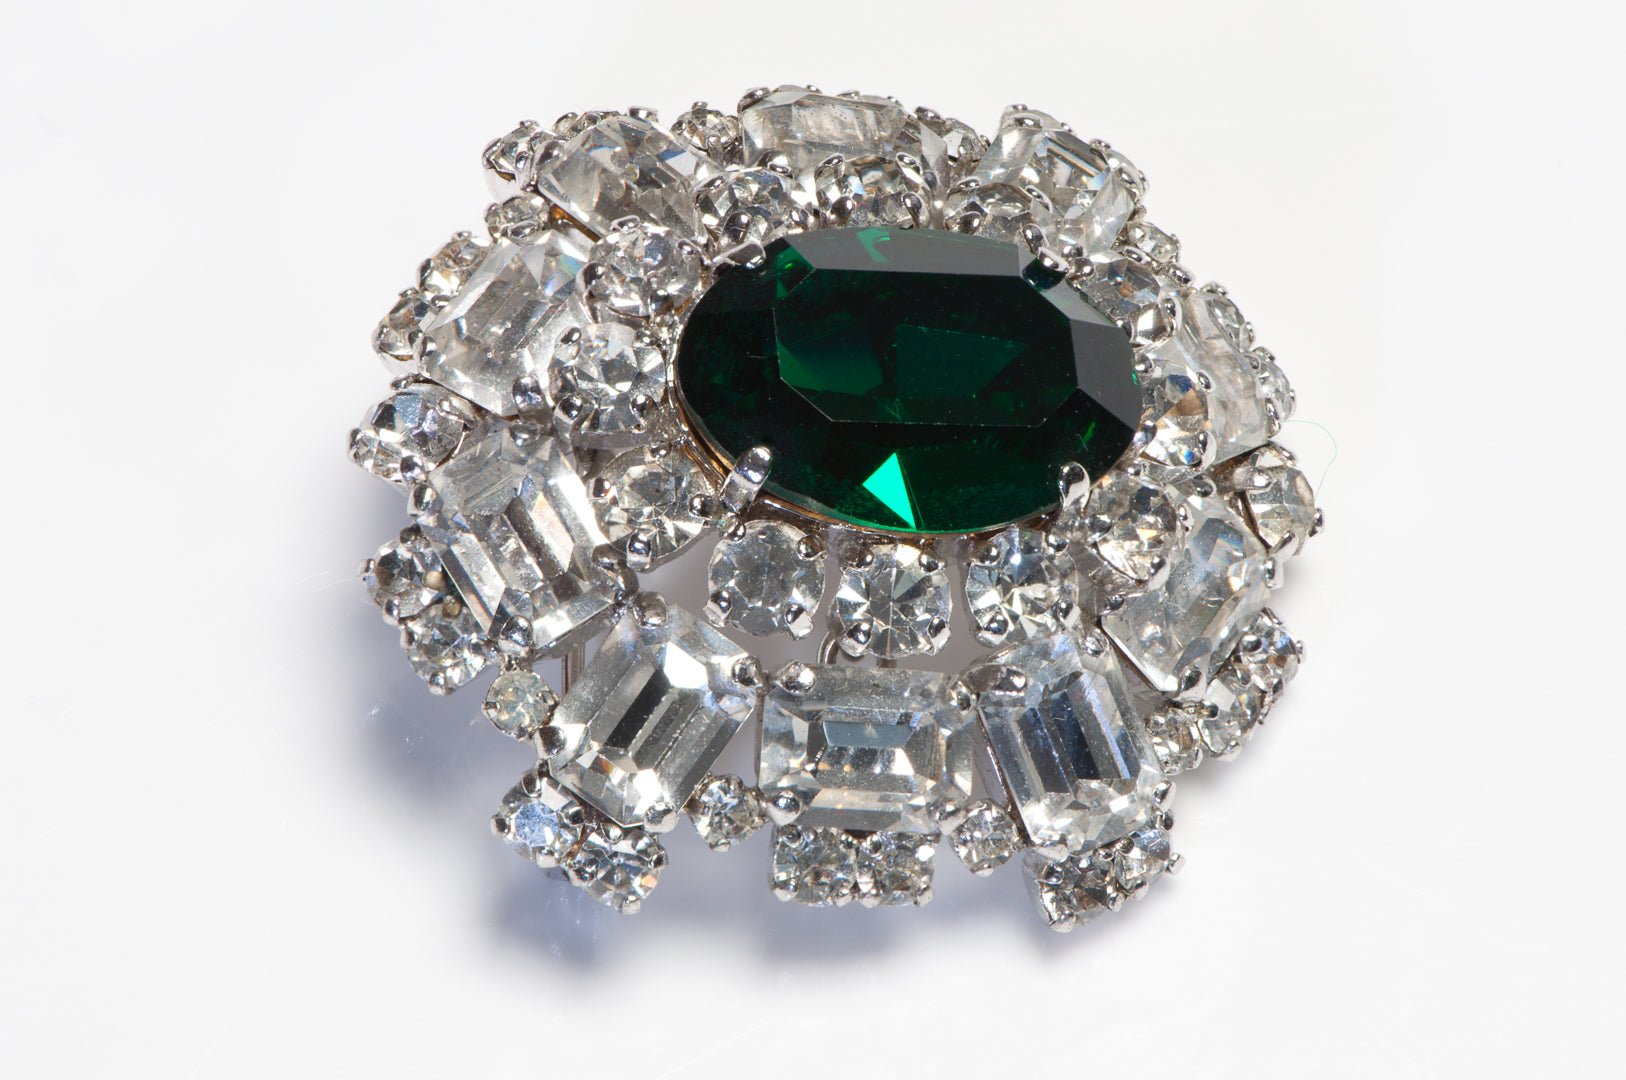 Christian Dior Paris 1967 Henkel & Grosse Germany Green Crystal Brooch - DSF Antique Jewelry